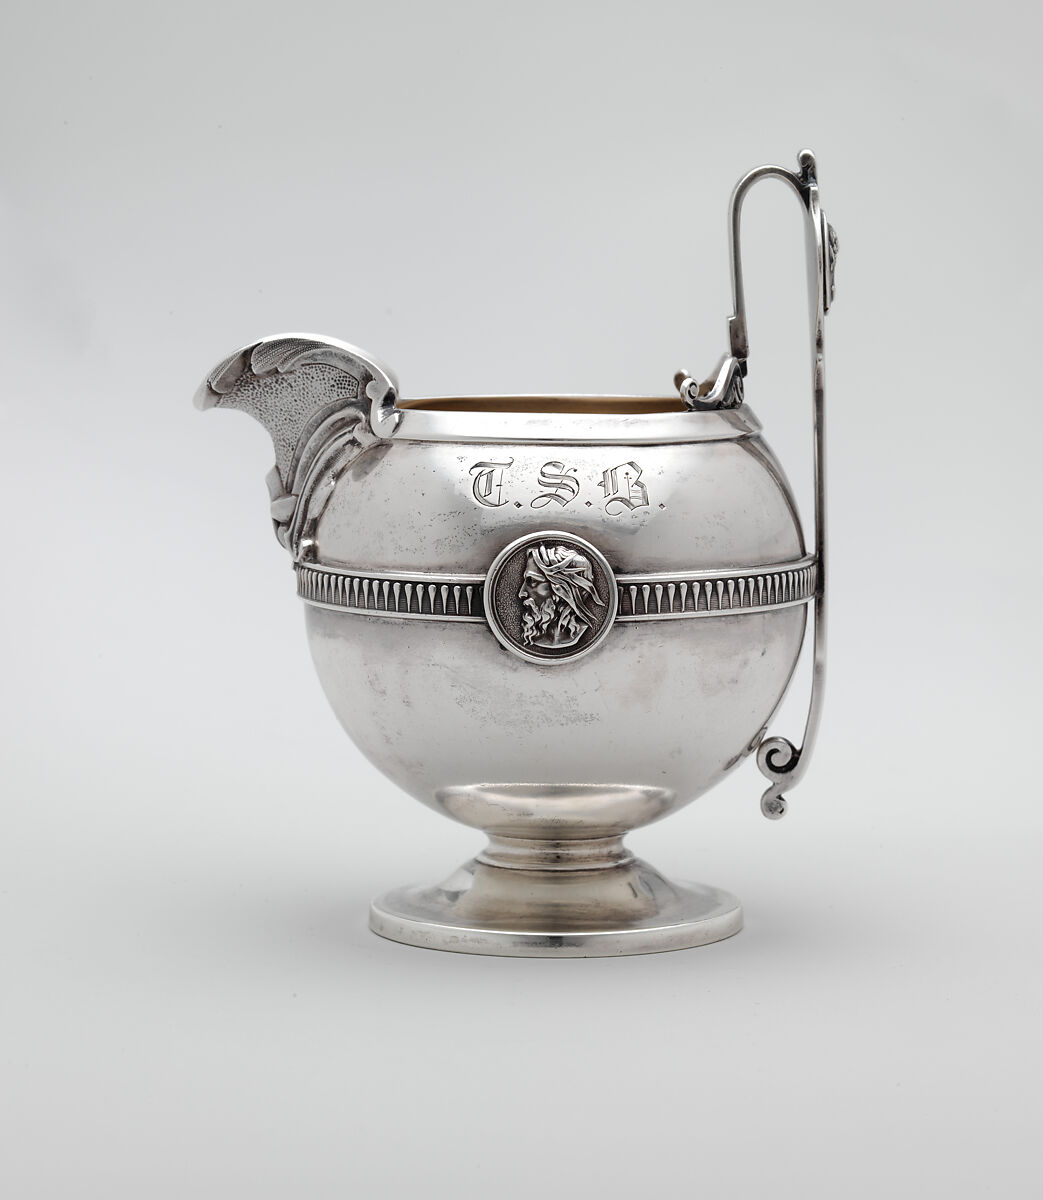 Creamer, Gorham Manufacturing Company (American, Providence, Rhode Island, 1831–present), Silver, American 